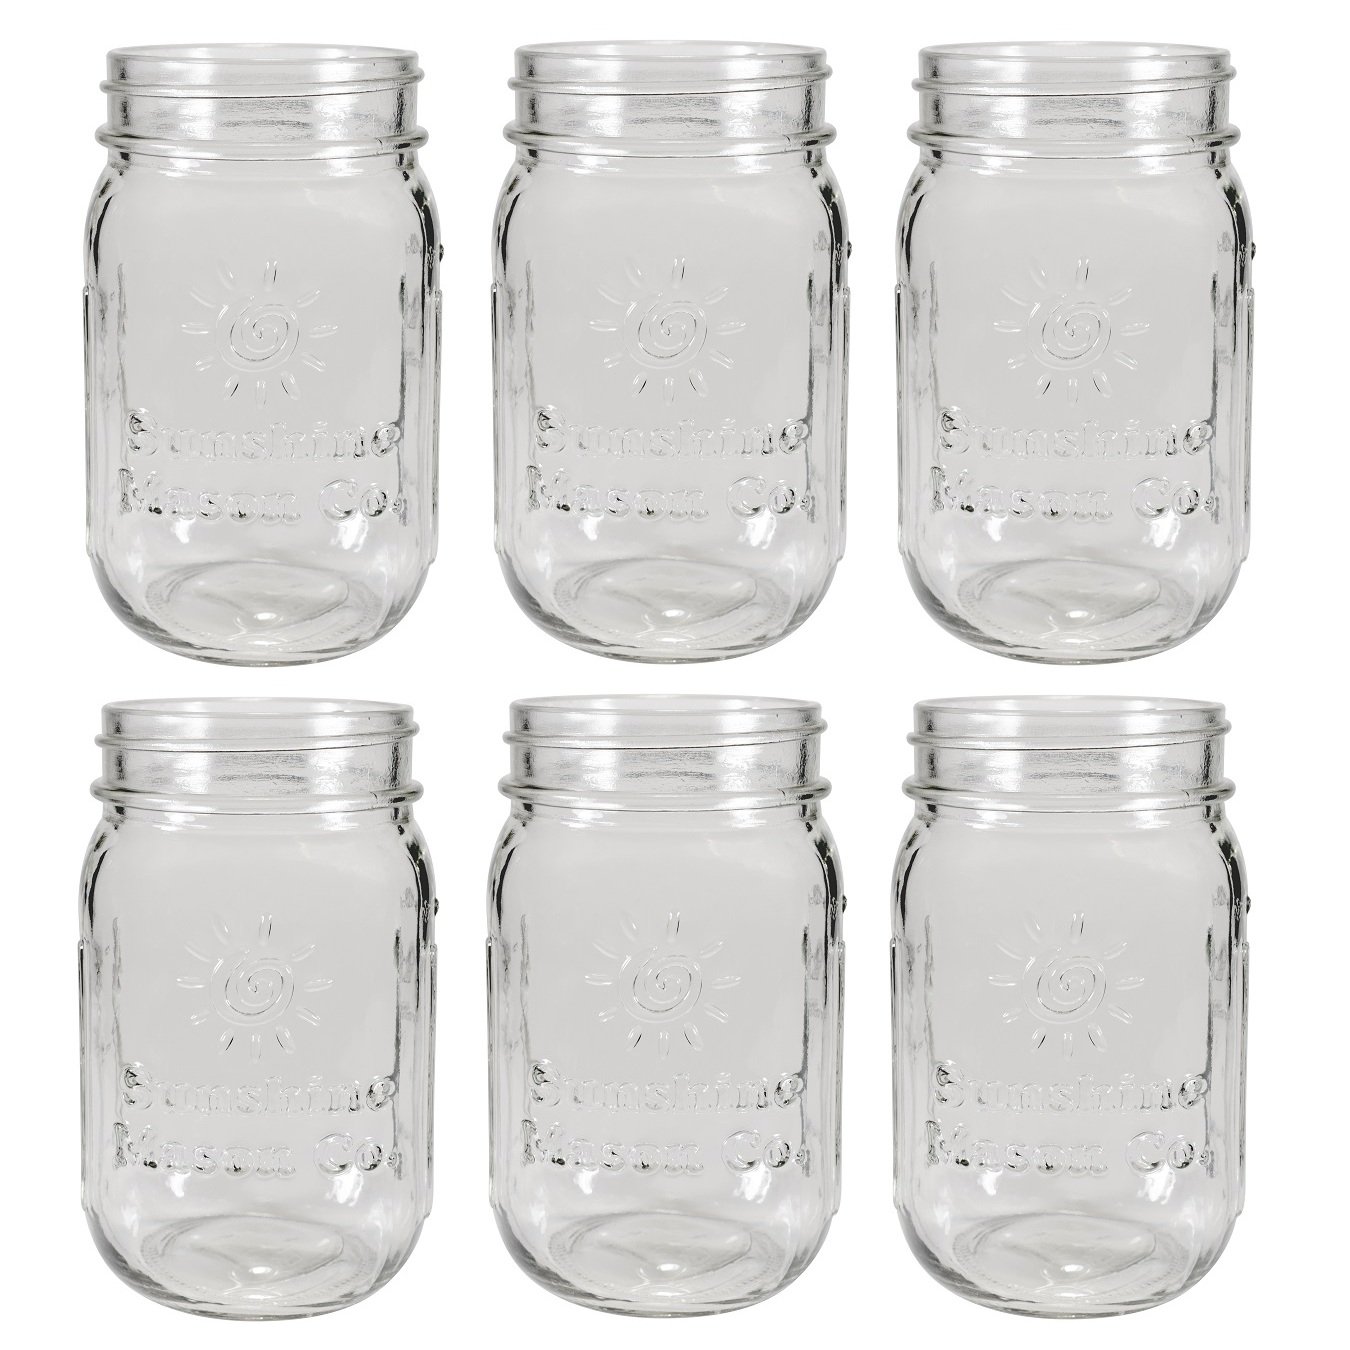 Sunshine Mason Co. Pint Size (16 Ounce, 473 Ml) Regular Mouth Drinking Glass Mason Jars 6 Pieces